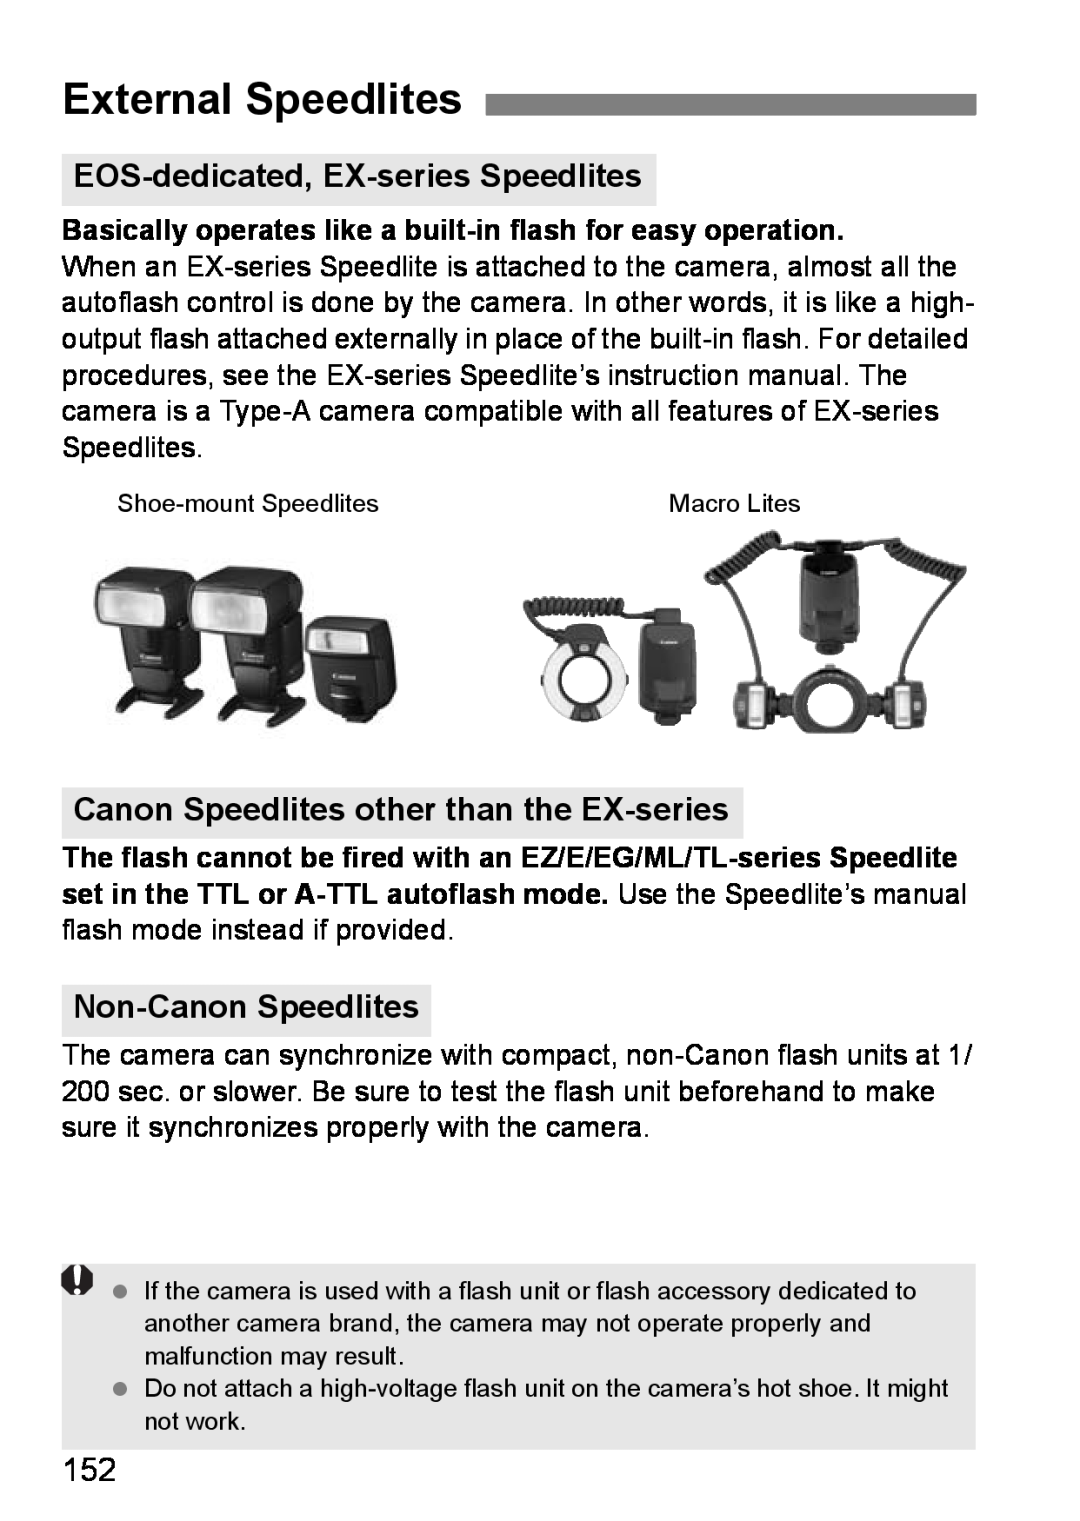 Canon EOS DIGITAL REBEL XTI External Speedlites, EOS-dedicated, EX-series Speedlites, Non-Canon Speedlites 